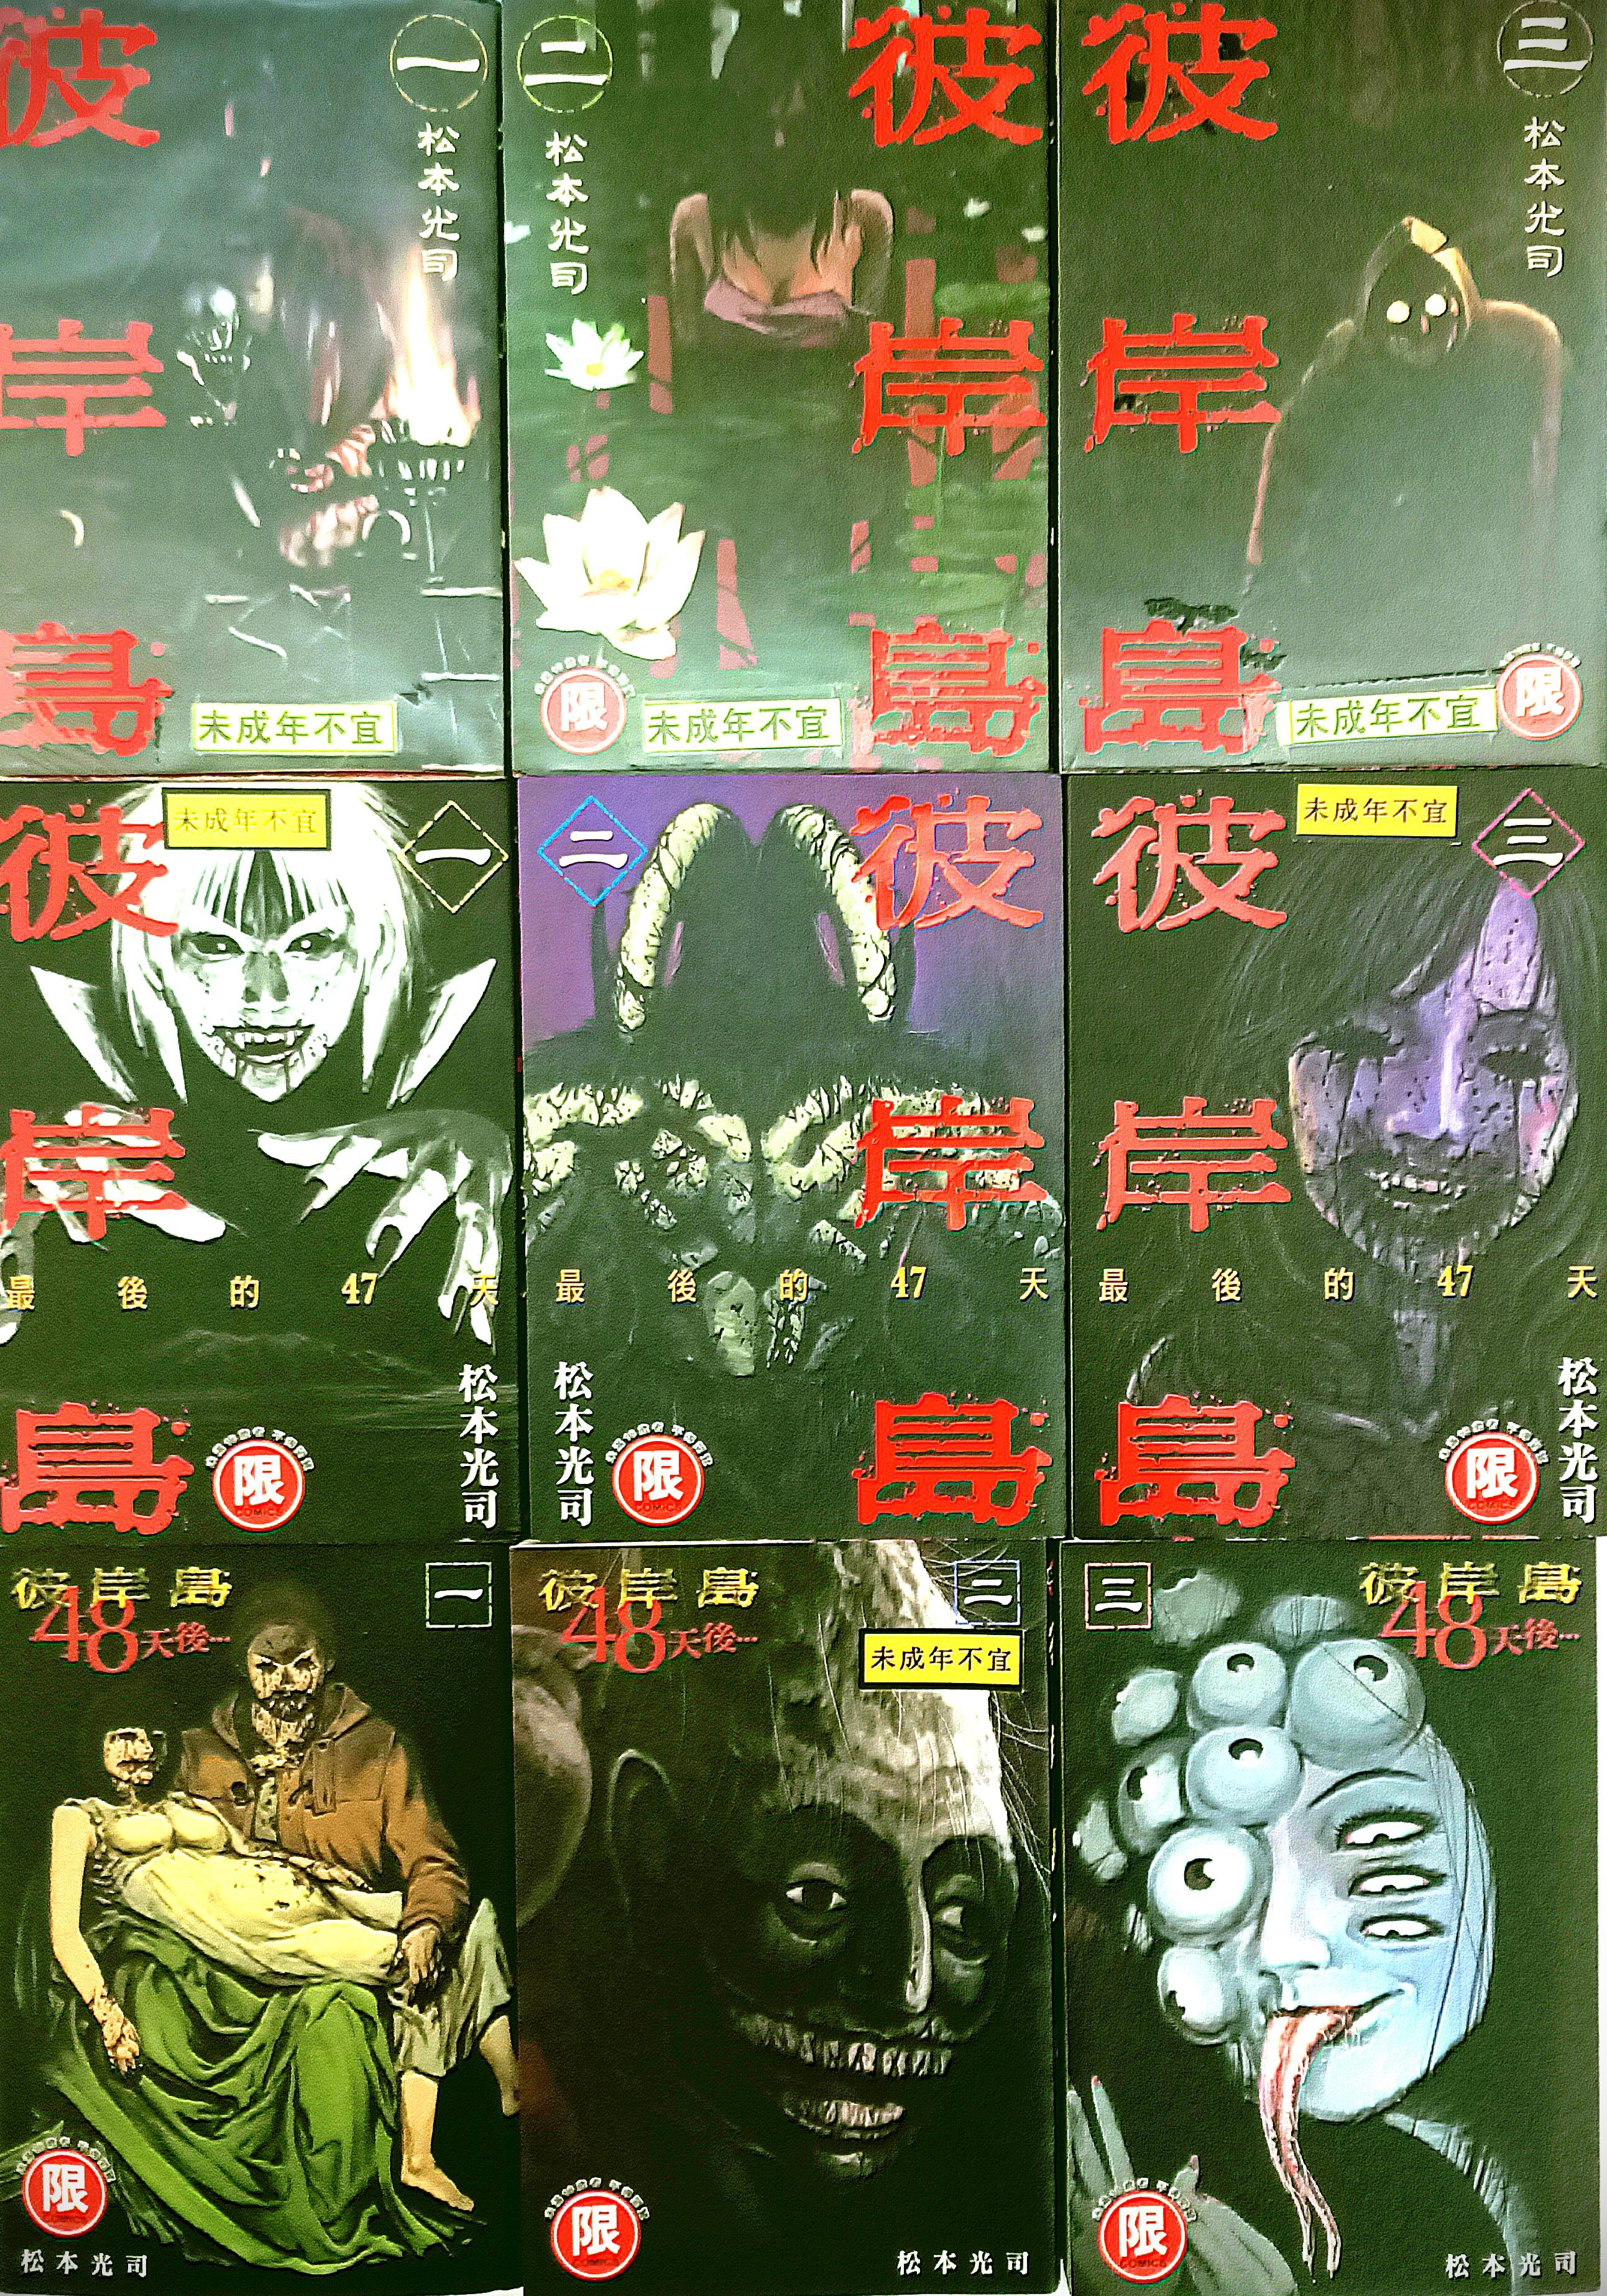 Chinese Horror Manga 彼岸岛 Vol 1 16 19 21 25 27 28 30 33 彼岸岛 最后47天 Vol 1 14 彼岸岛48天后 Vol 1 6 8 Hobbies Toys Books Magazines Comics Manga On Carousell